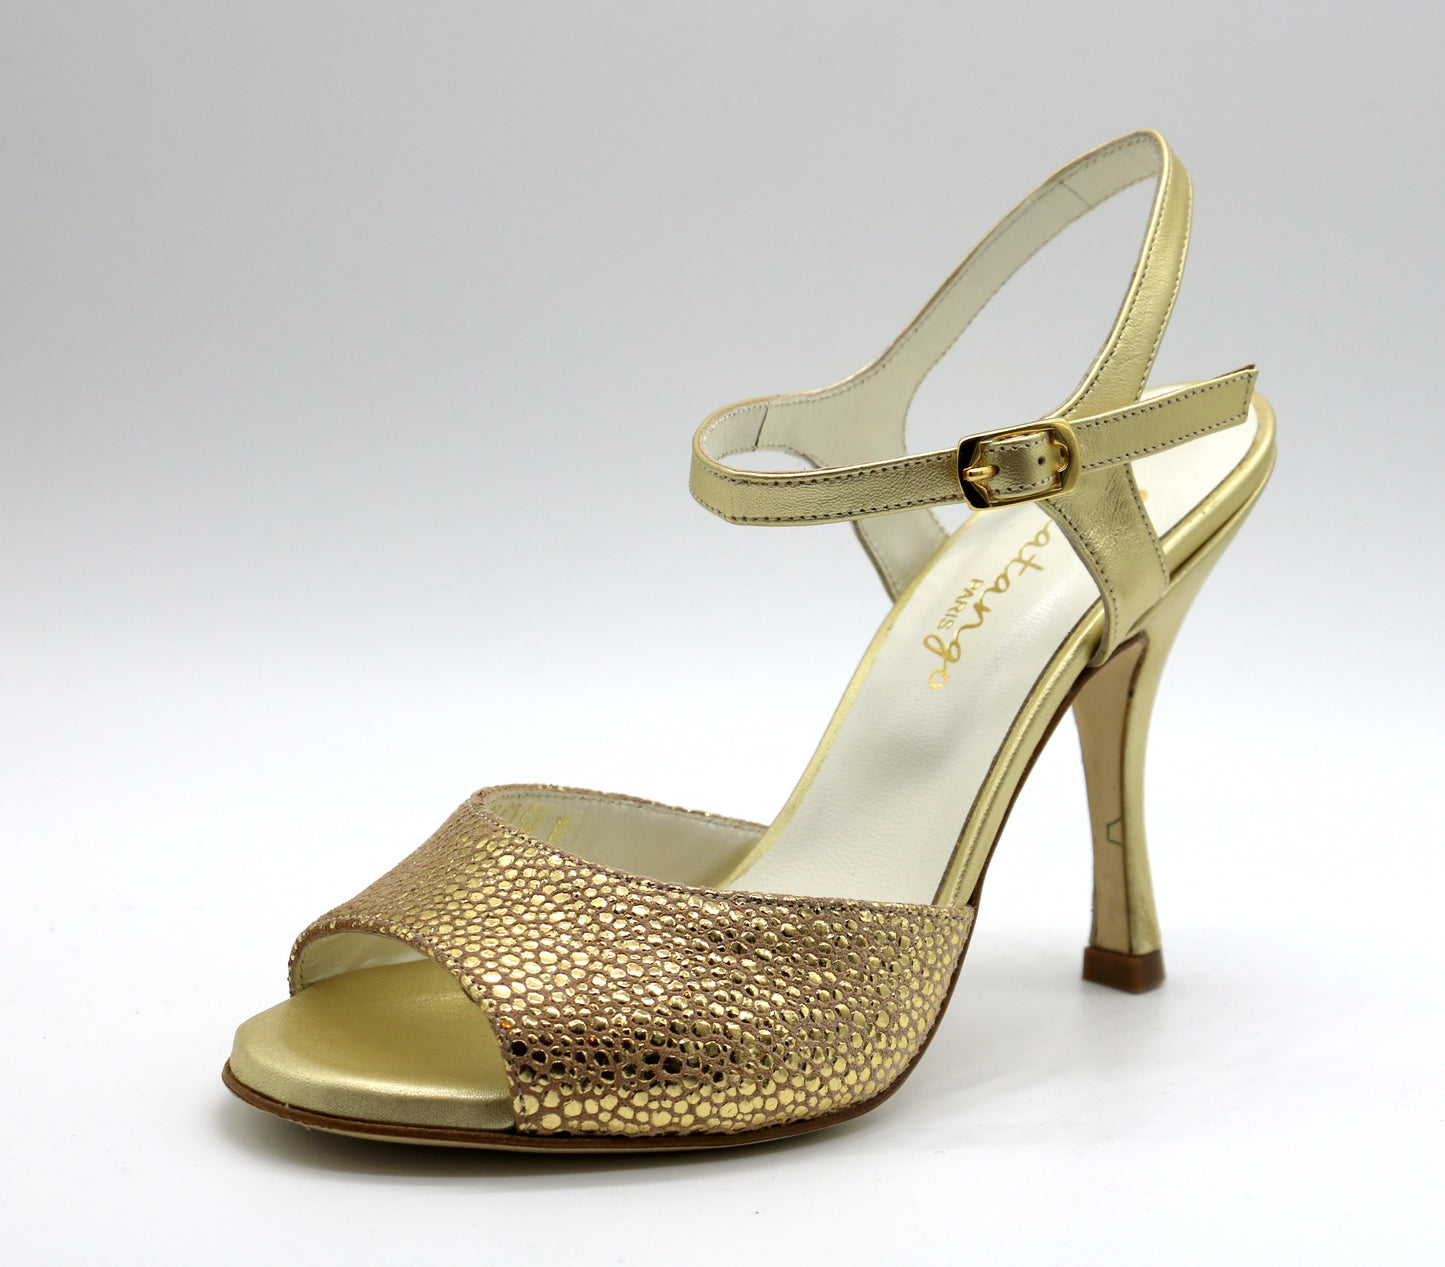 Uno Gold Leather Pop heels 9cm